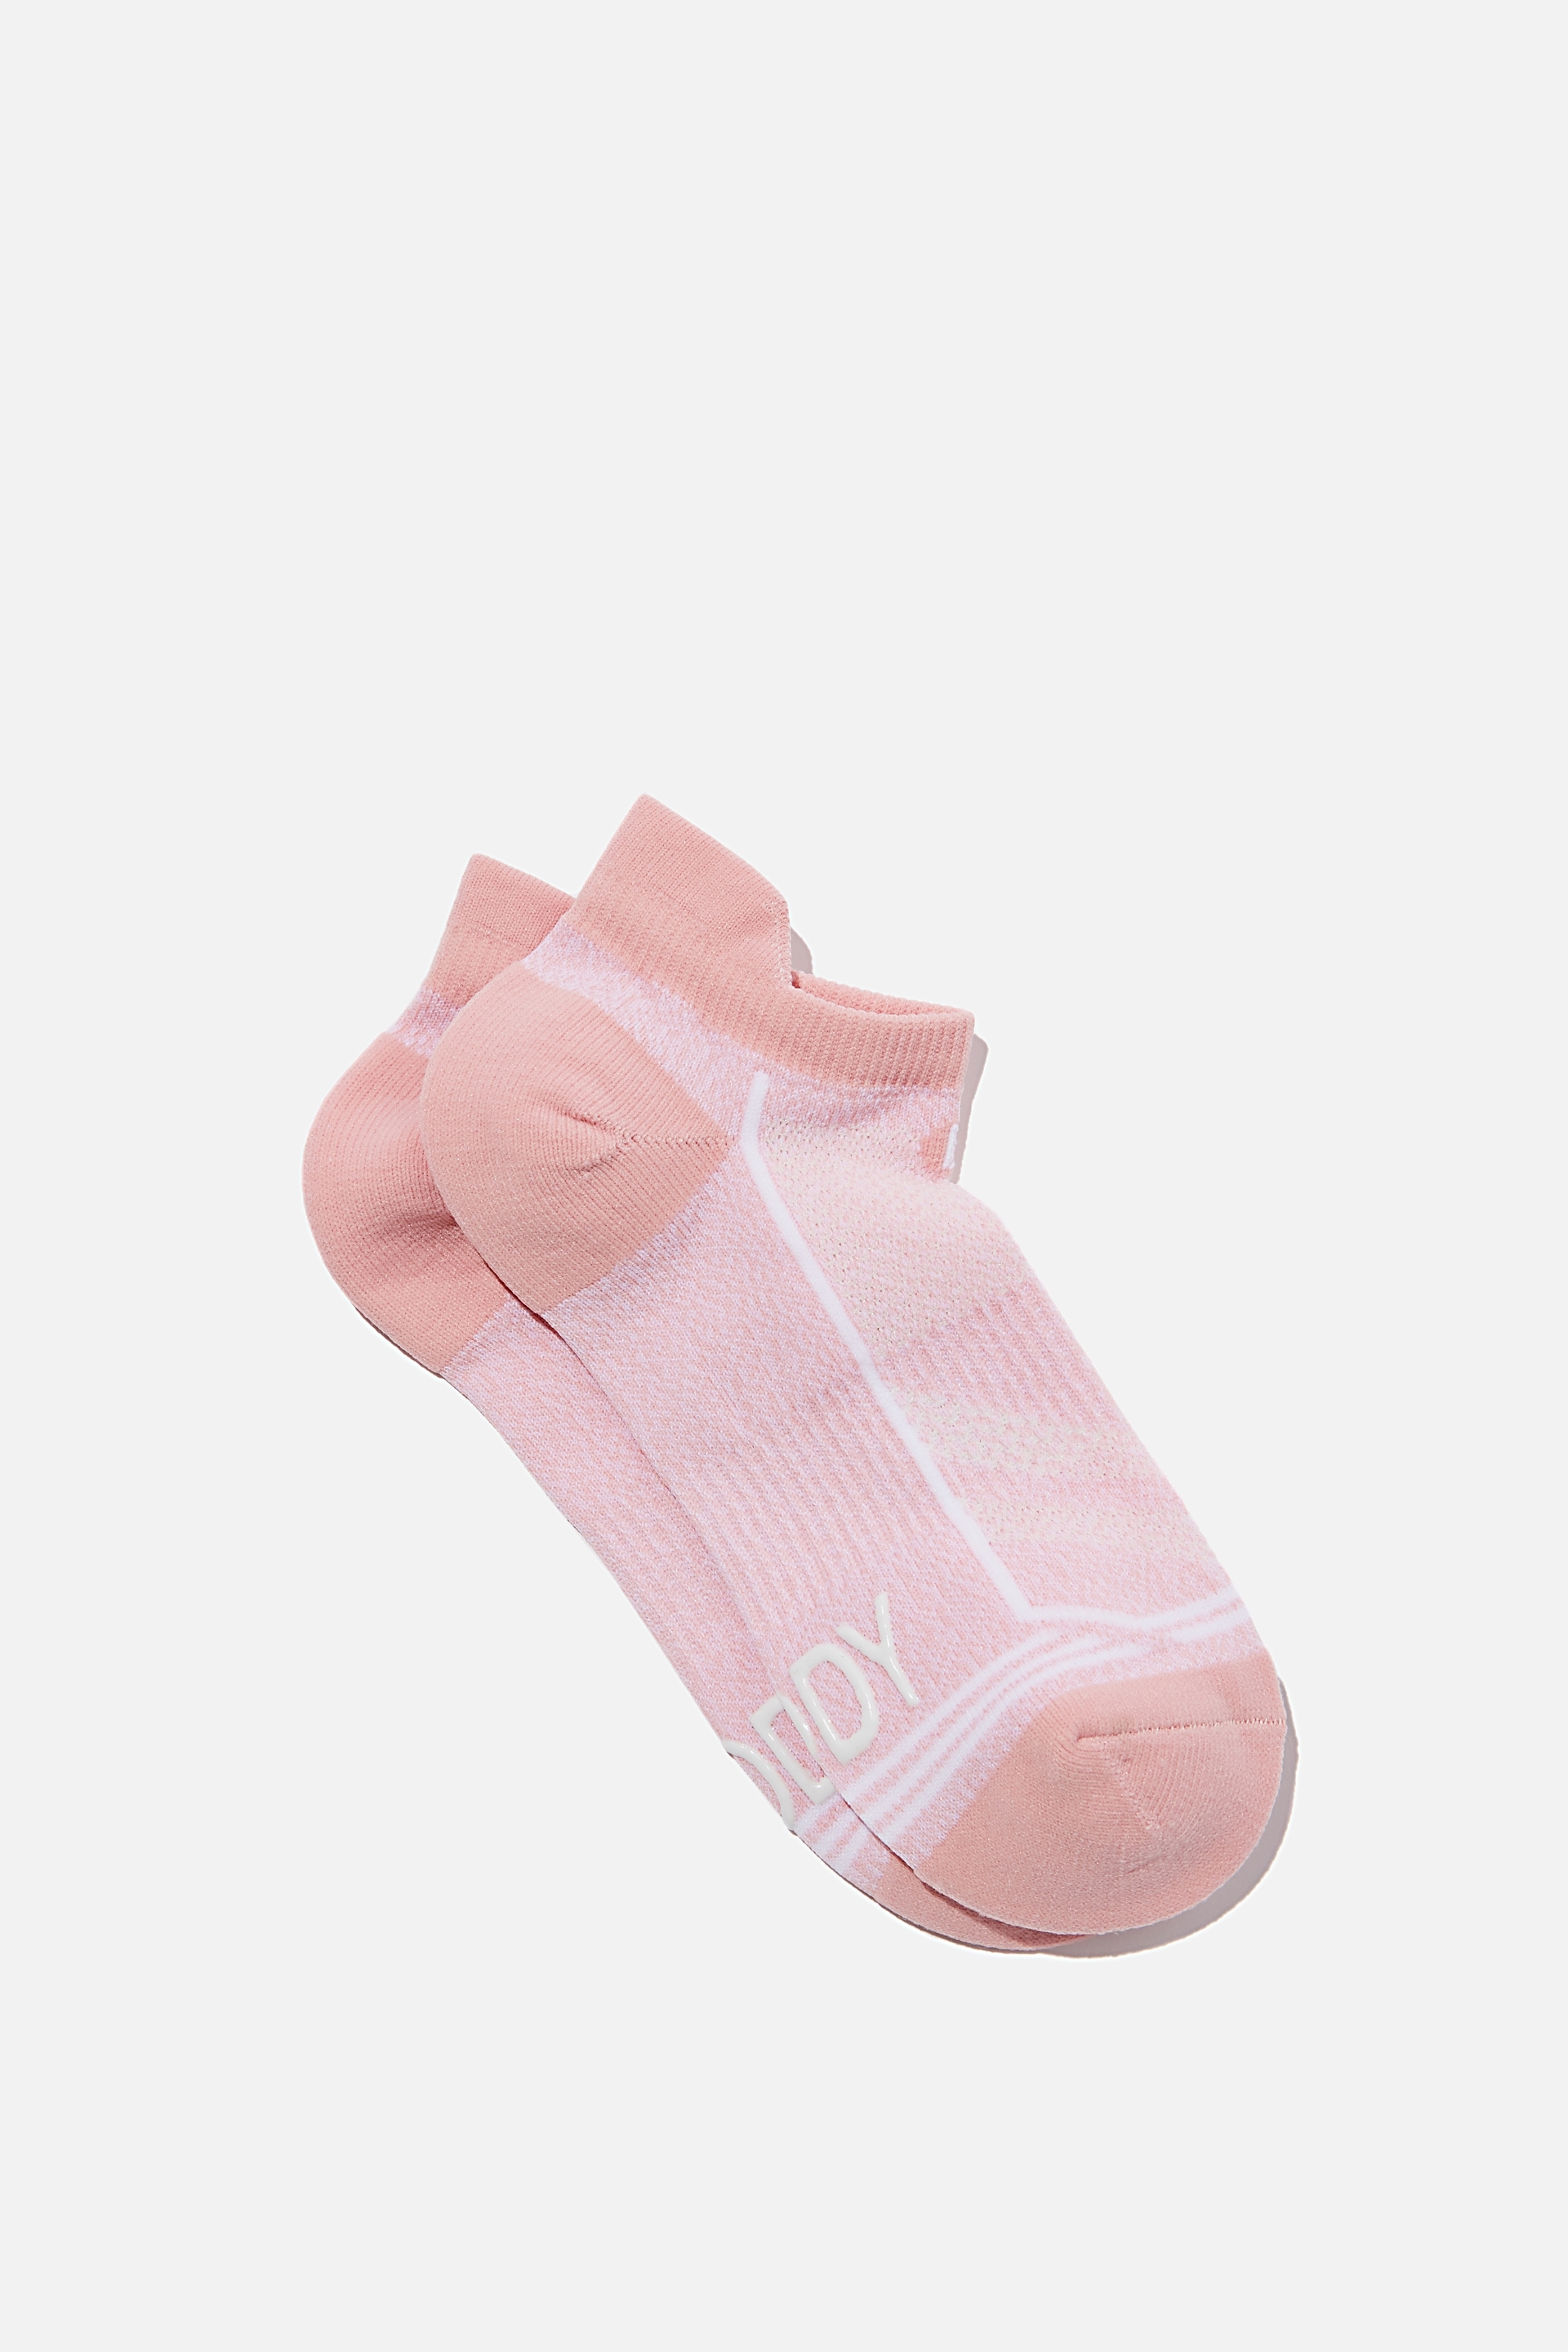 Body - Running Sock - Pink almond